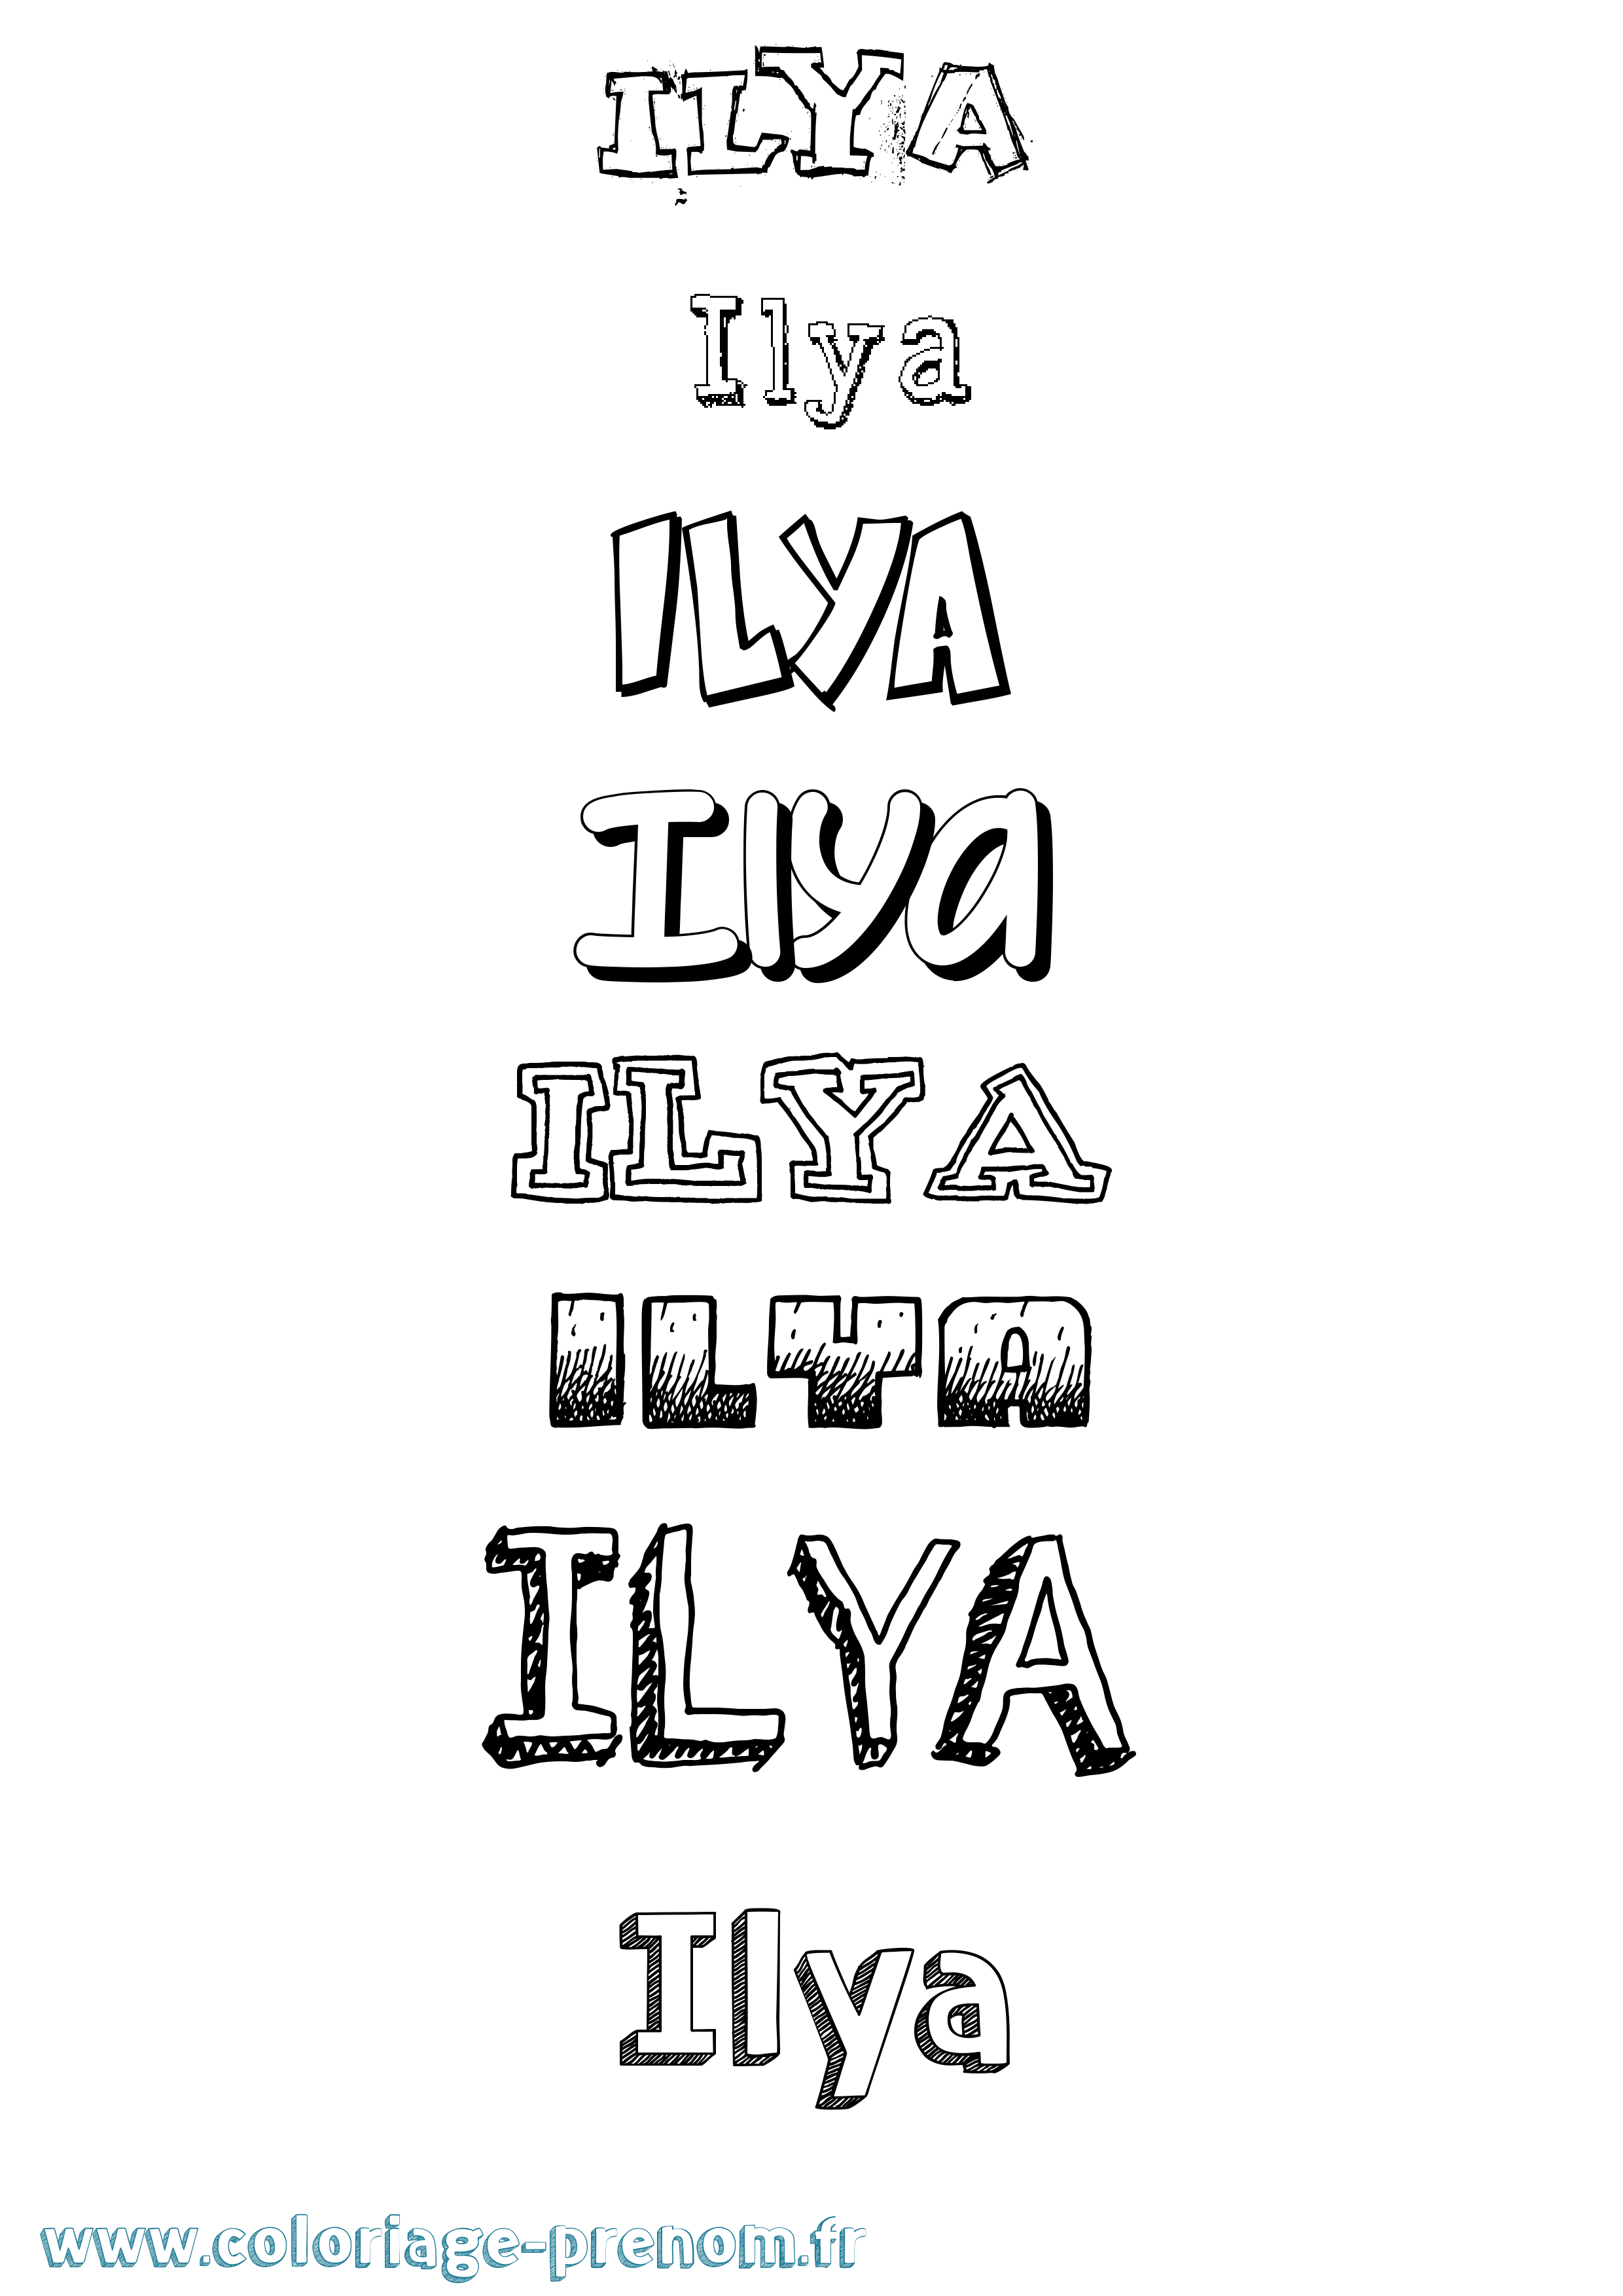 Coloriage prénom Ilya